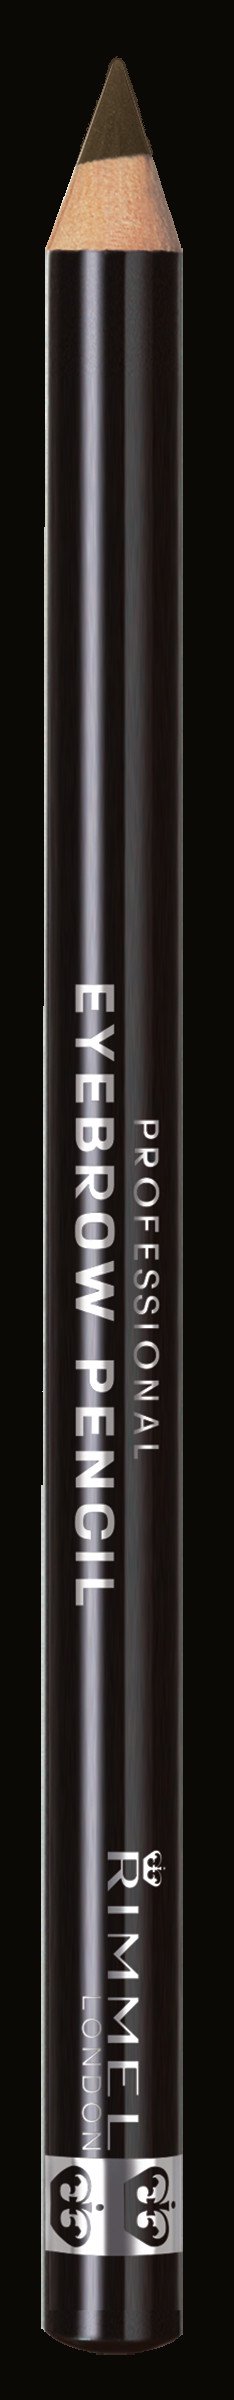 Rimmel Professional Eyebrow Pencil, Dark Brown (Best Eyebrow Pencil 2019)